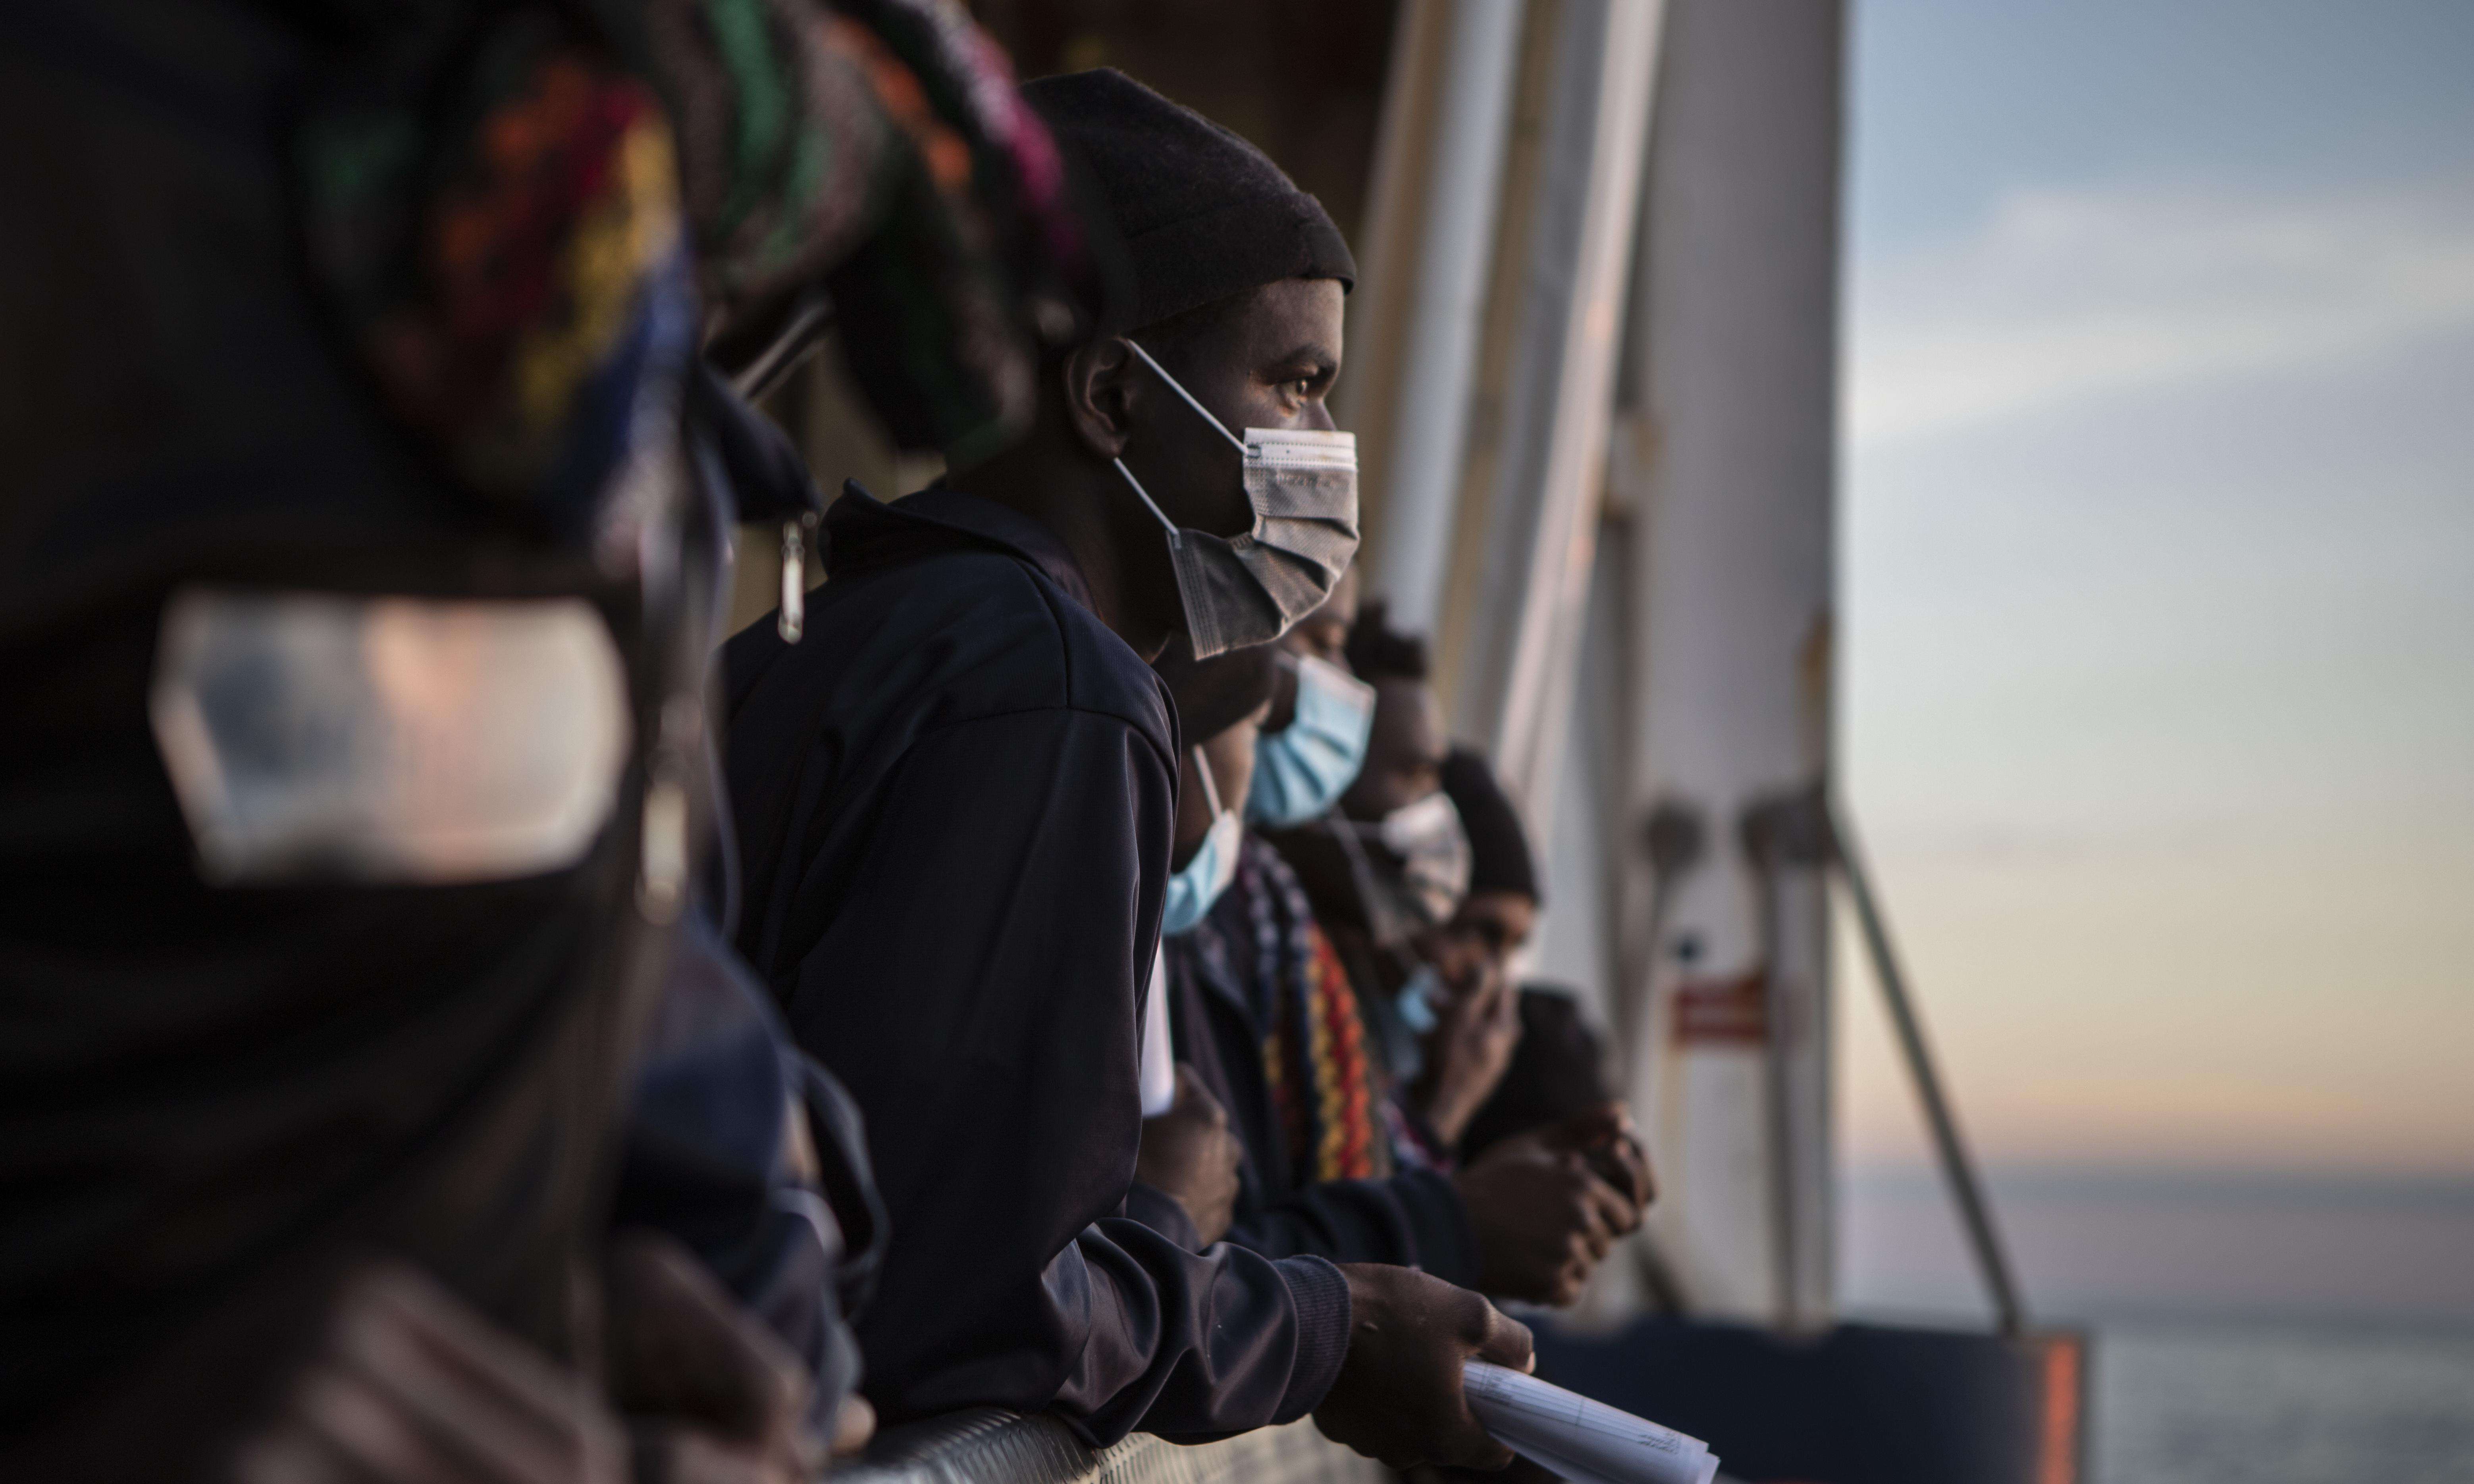 Migrants aboard search and rescue ship in Mediterranean